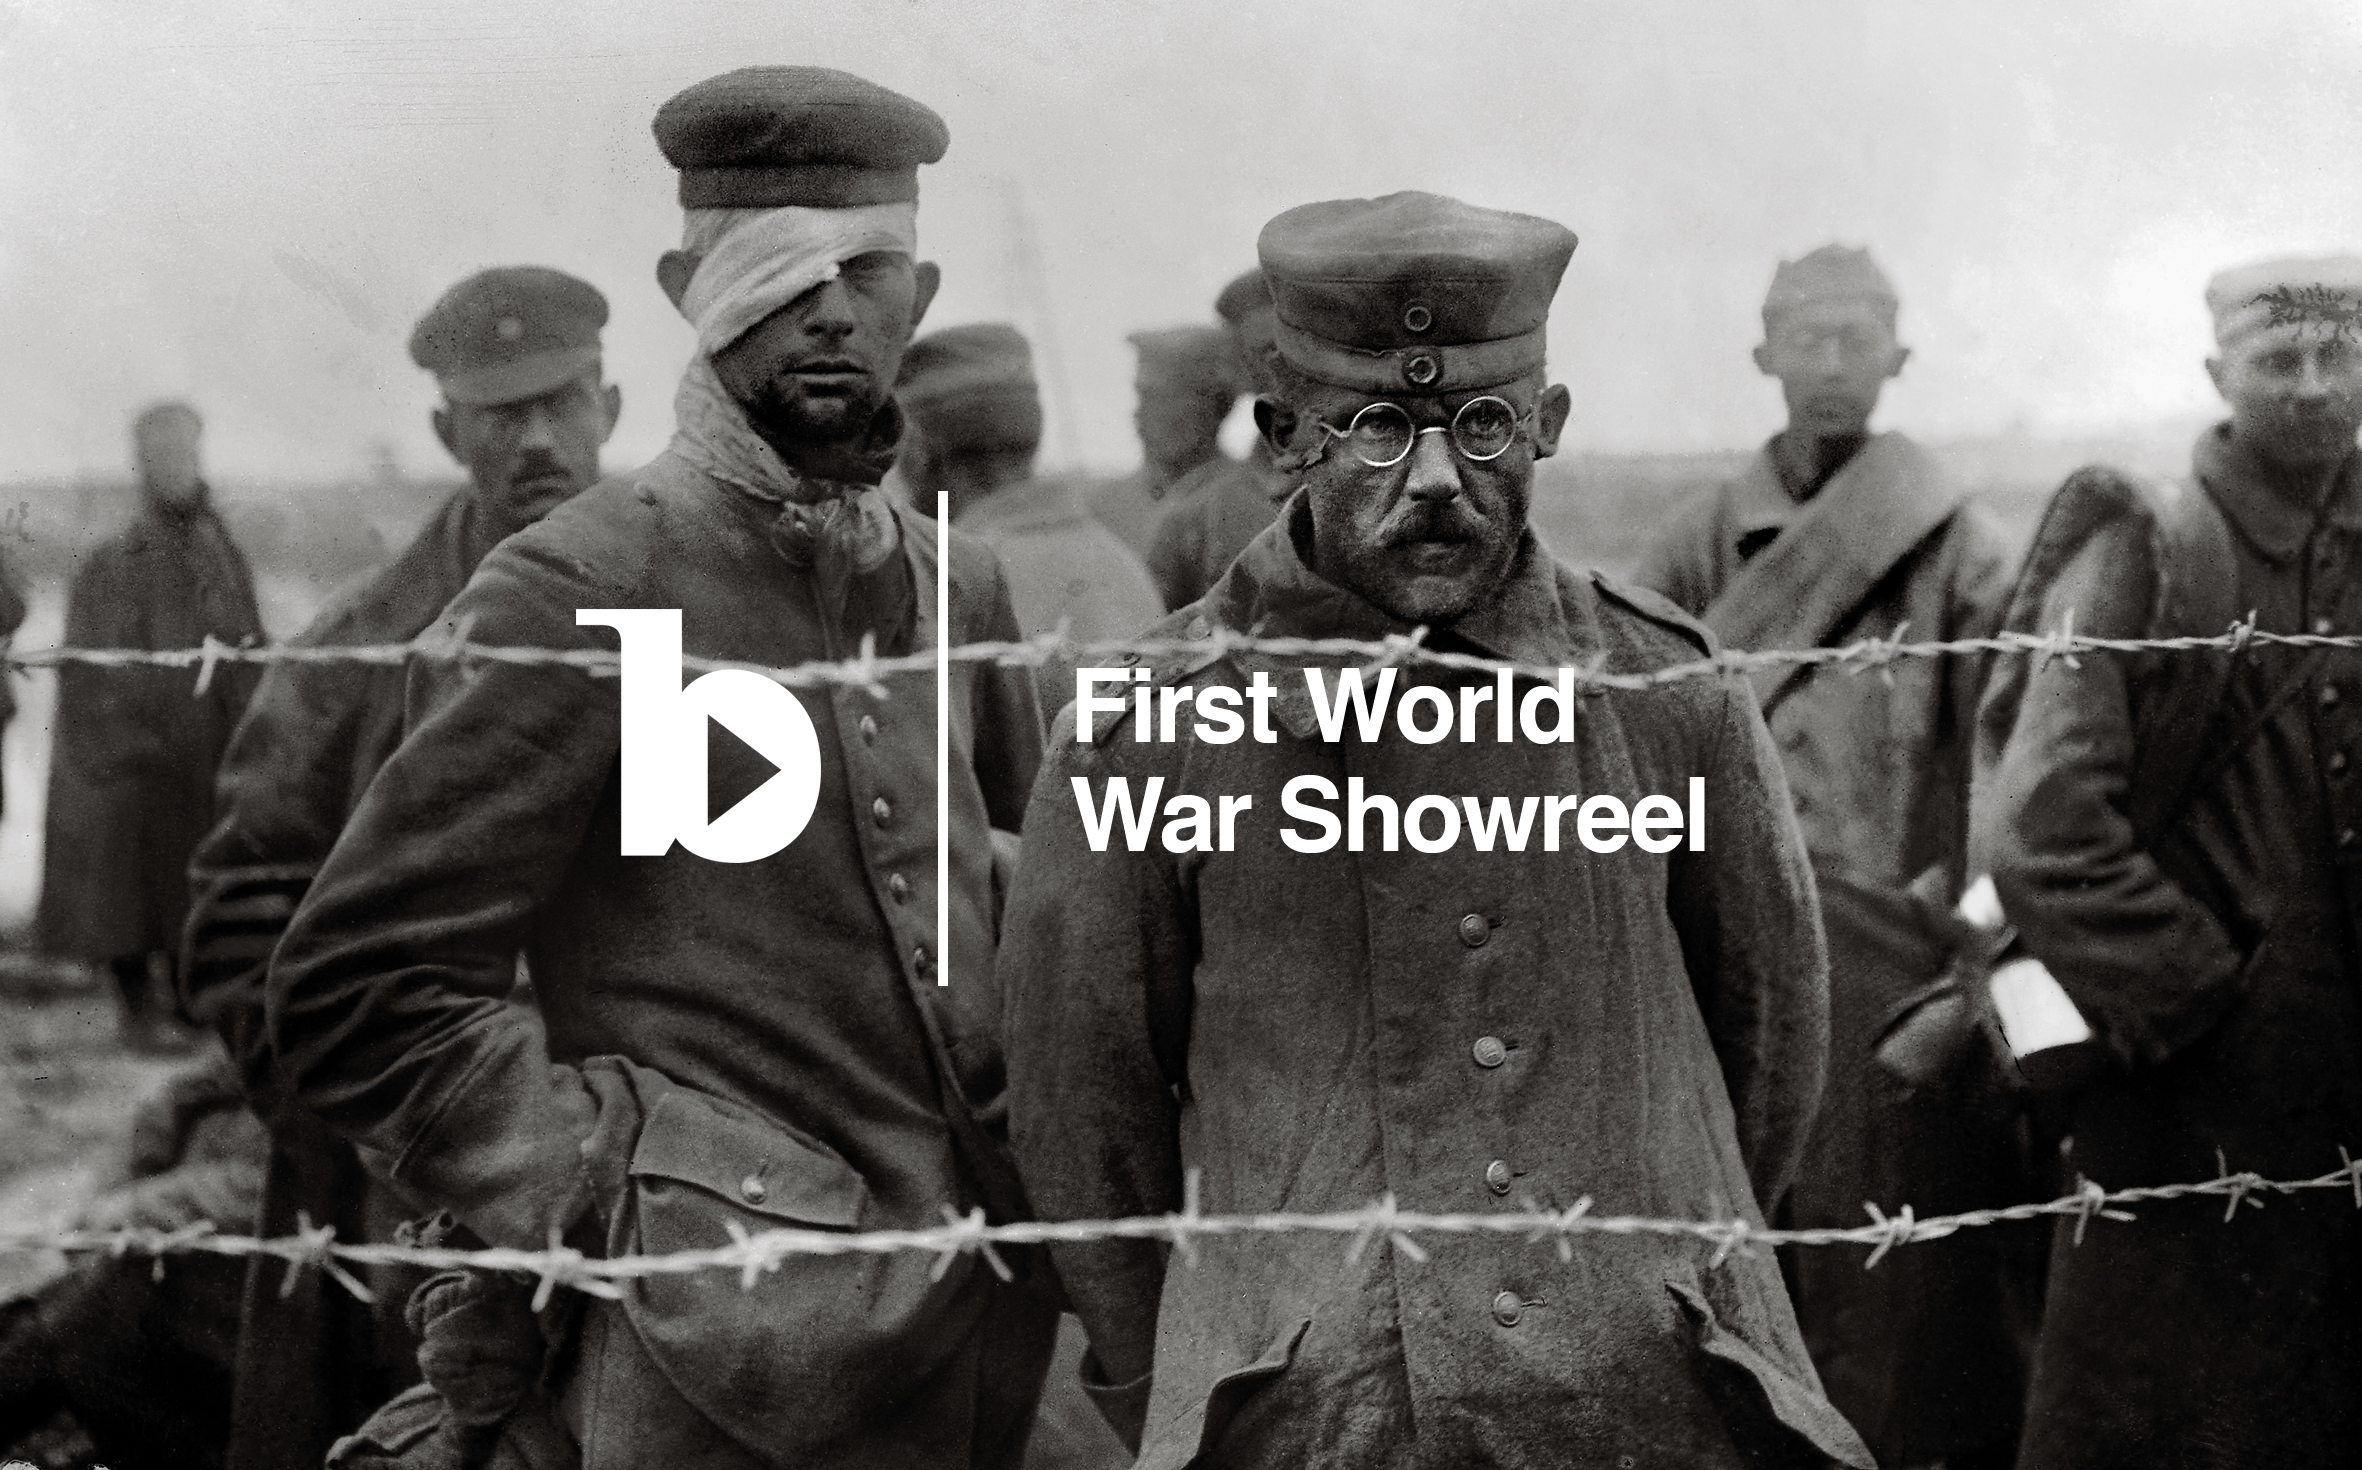 First World War showreel / Bridgeman Art Library